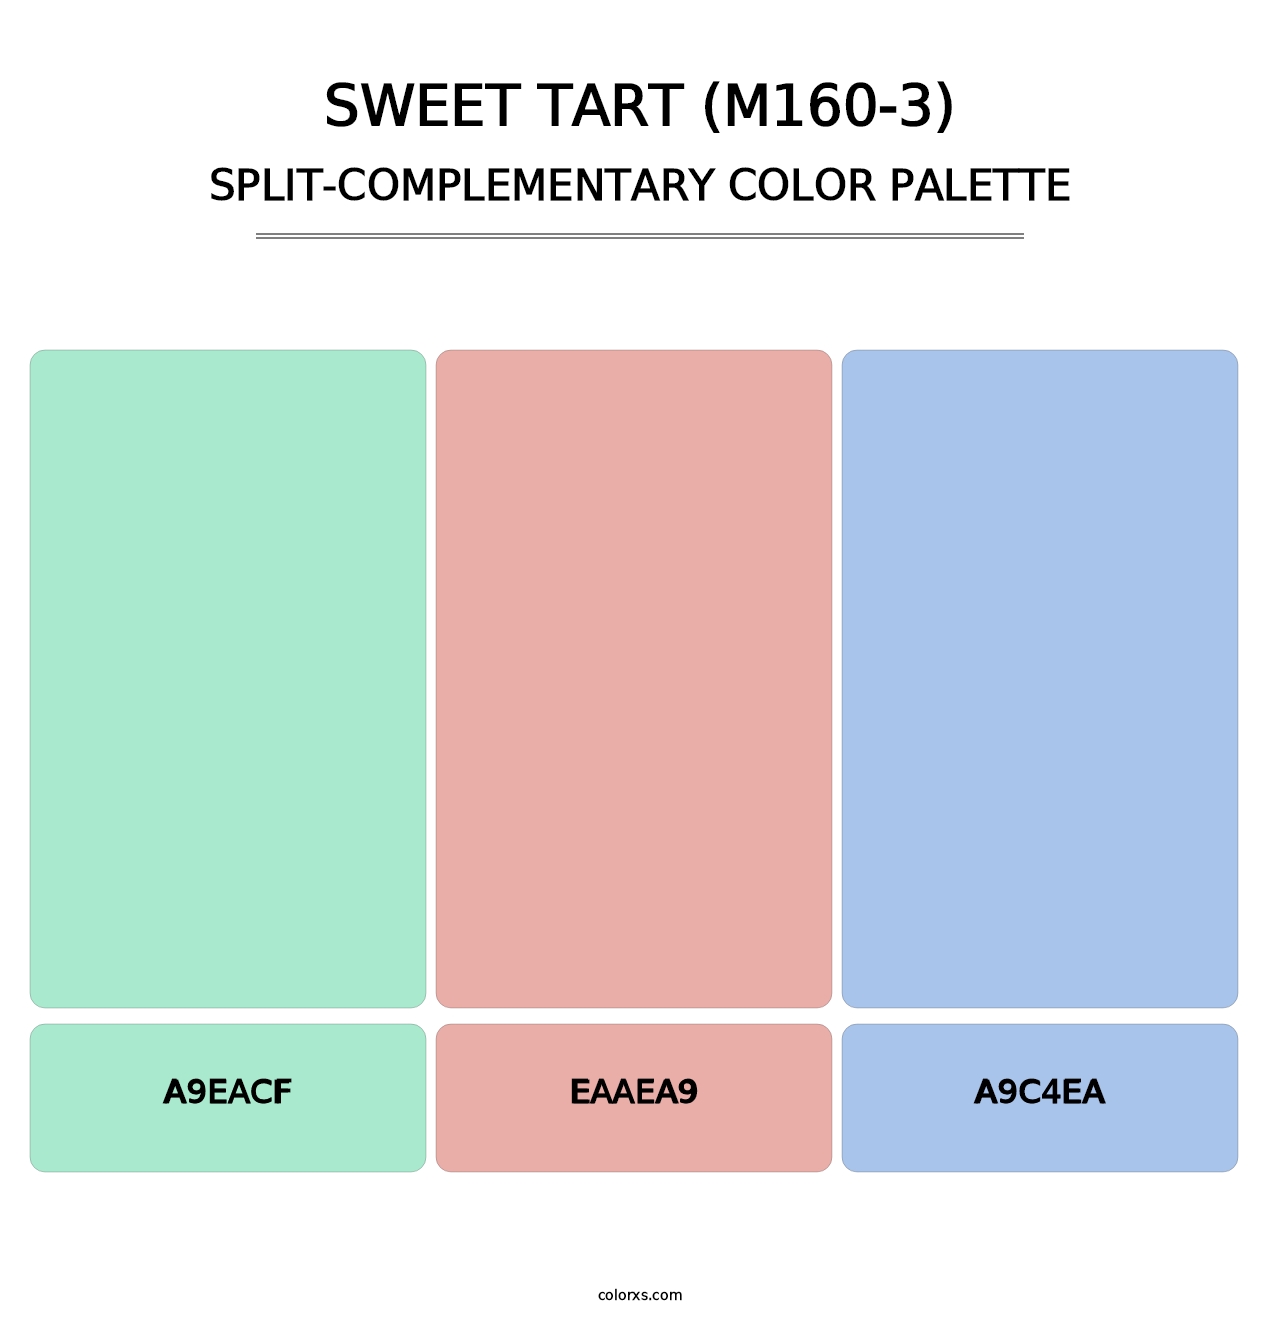 Sweet Tart (M160-3) - Split-Complementary Color Palette